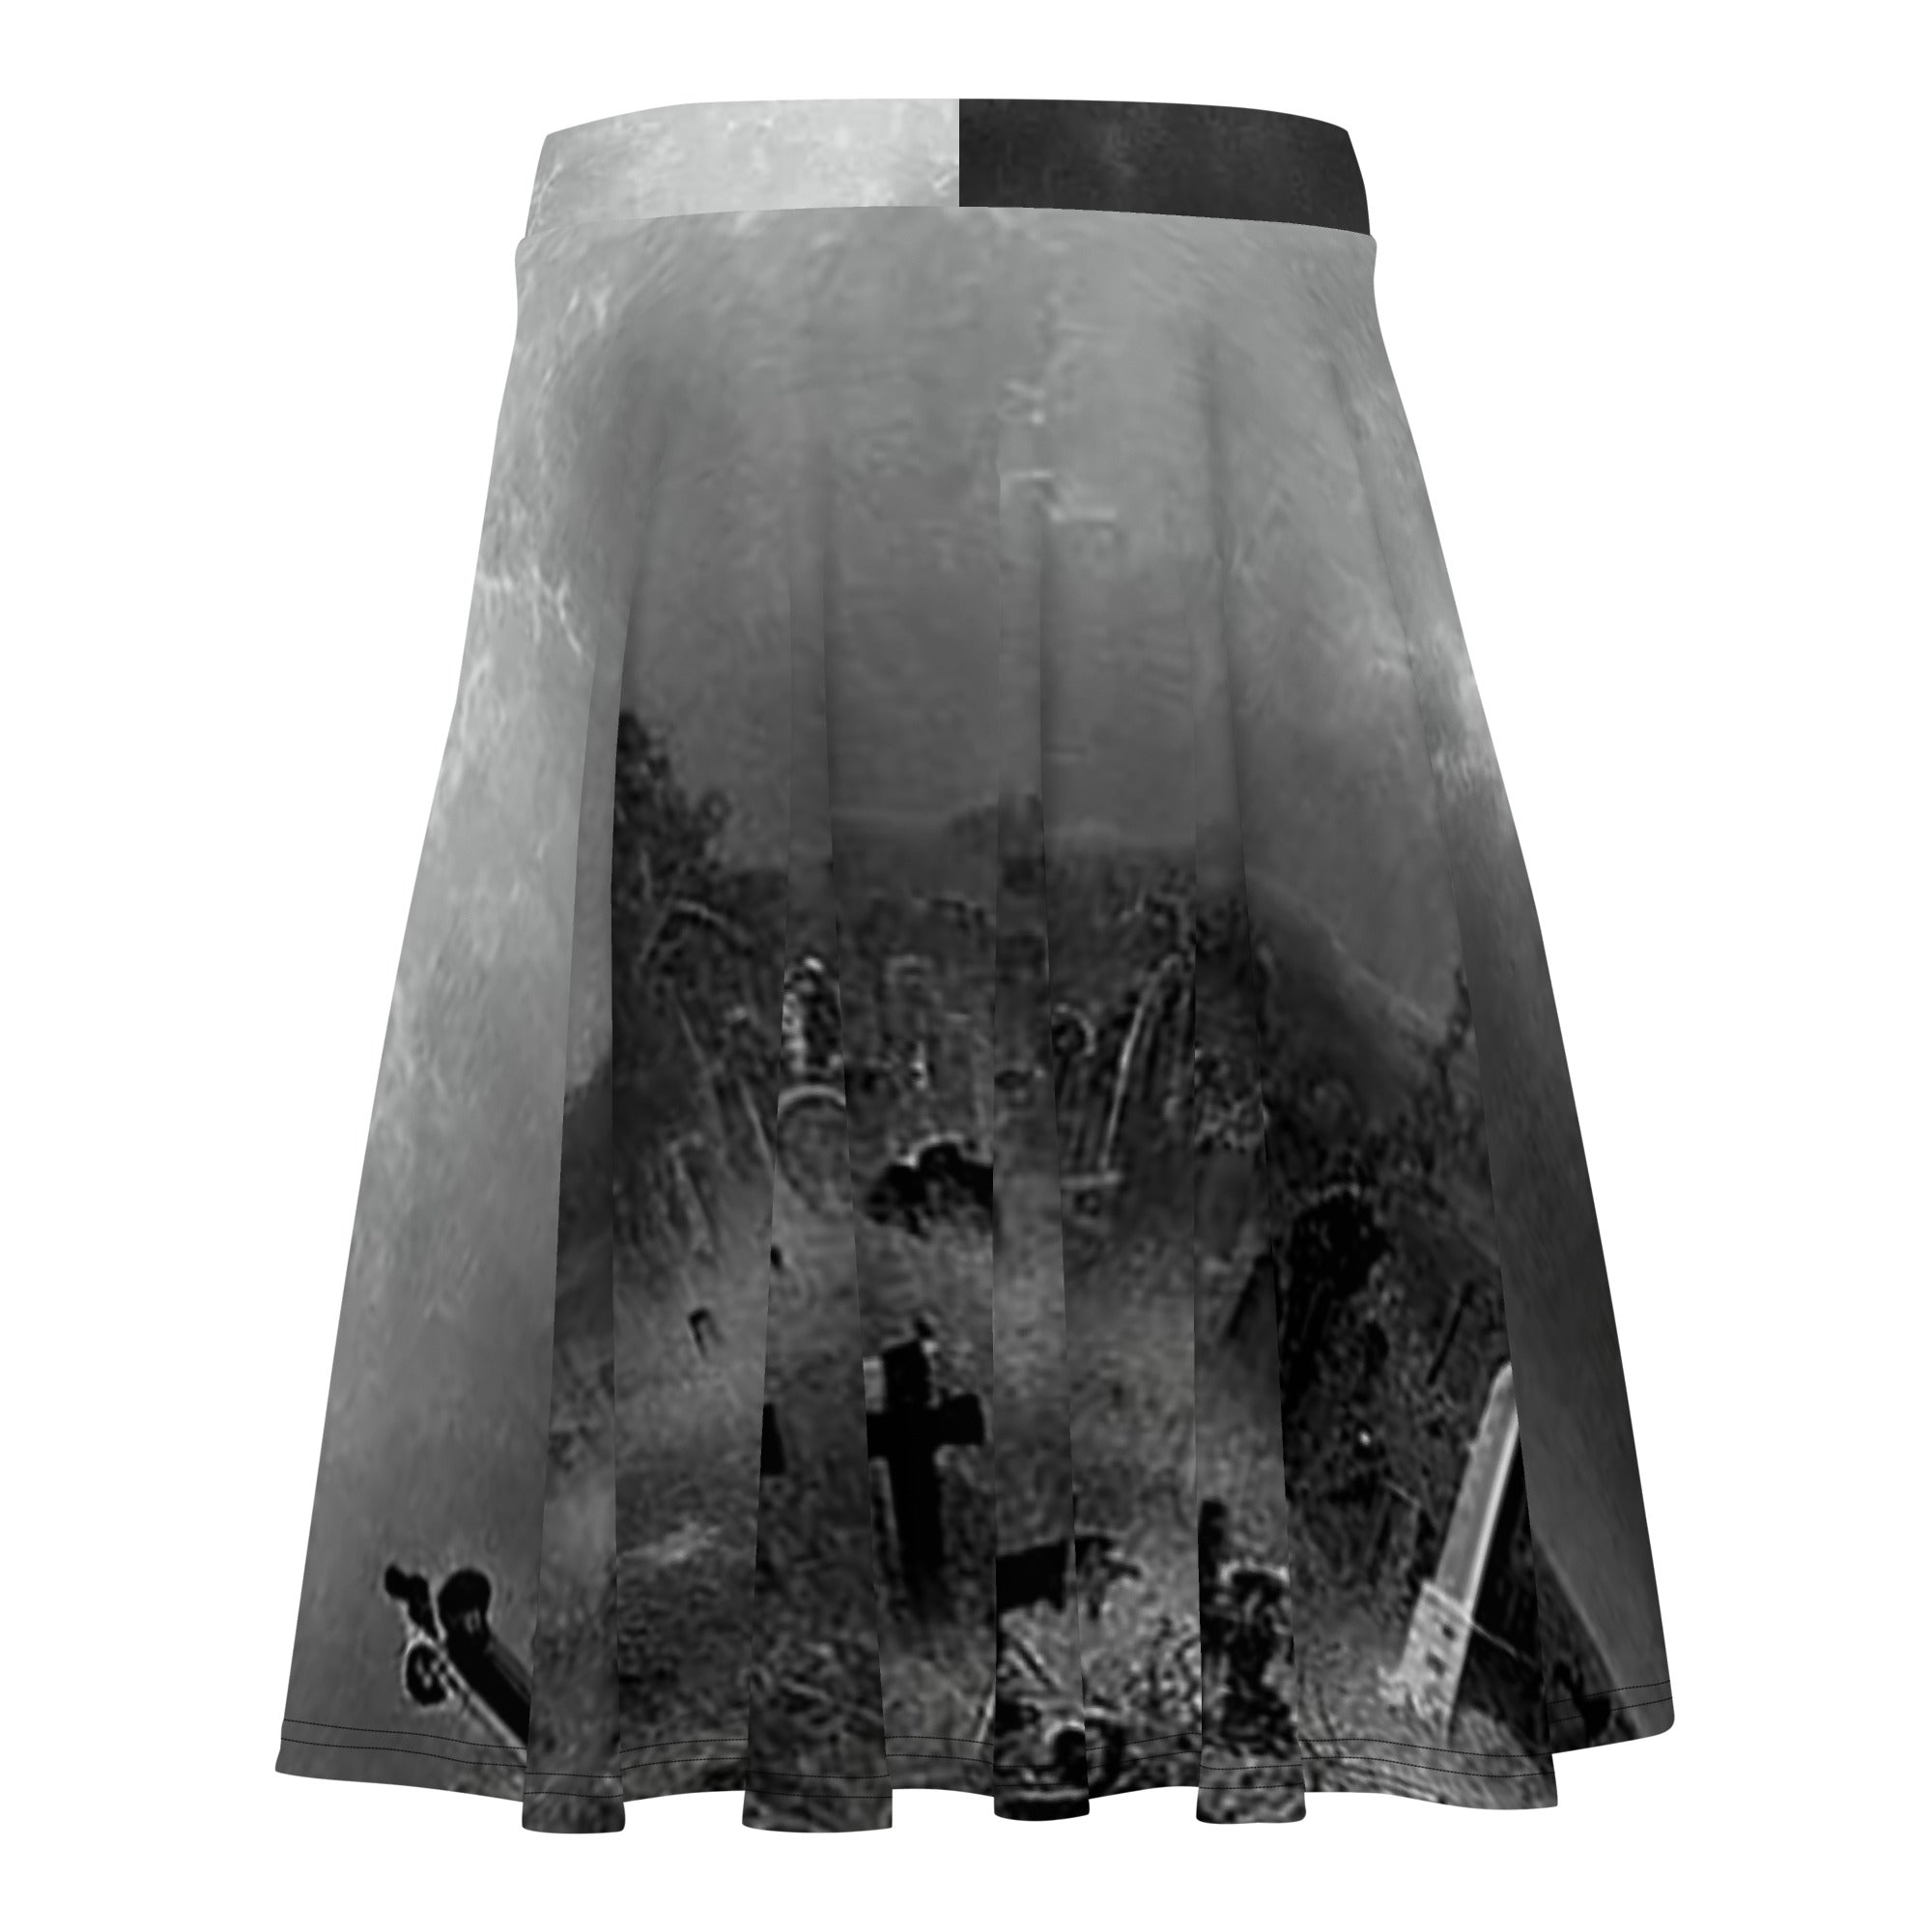 Gothic Haunted Cemetery Black and White Skater Skirt